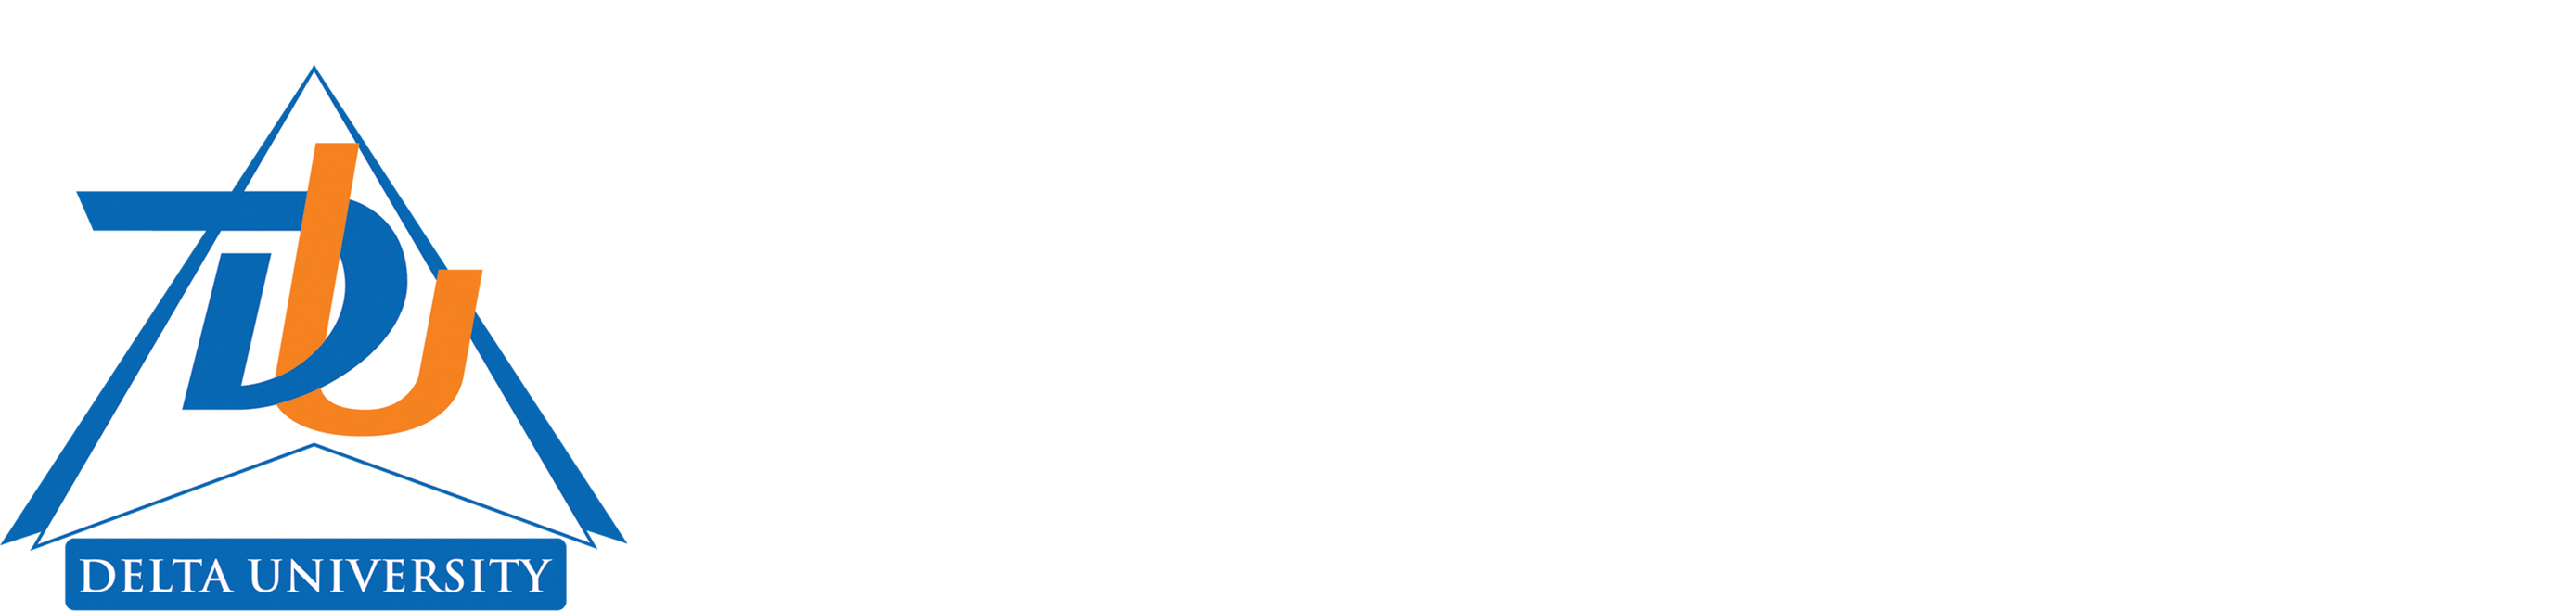 Delta university logo